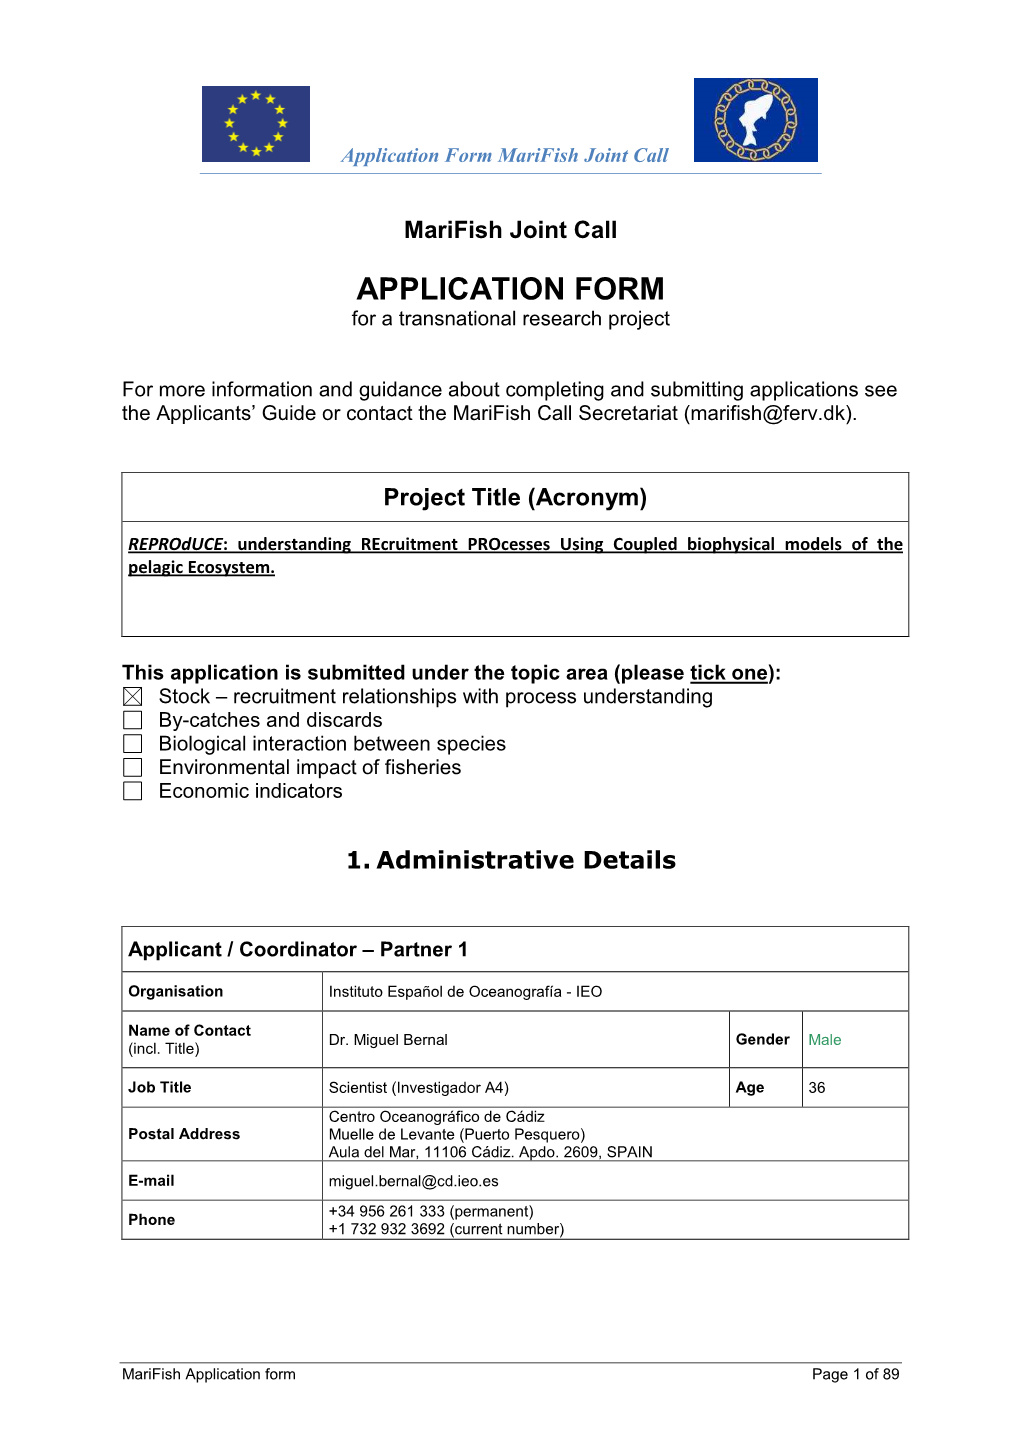 Application Form Marifish Joint Call